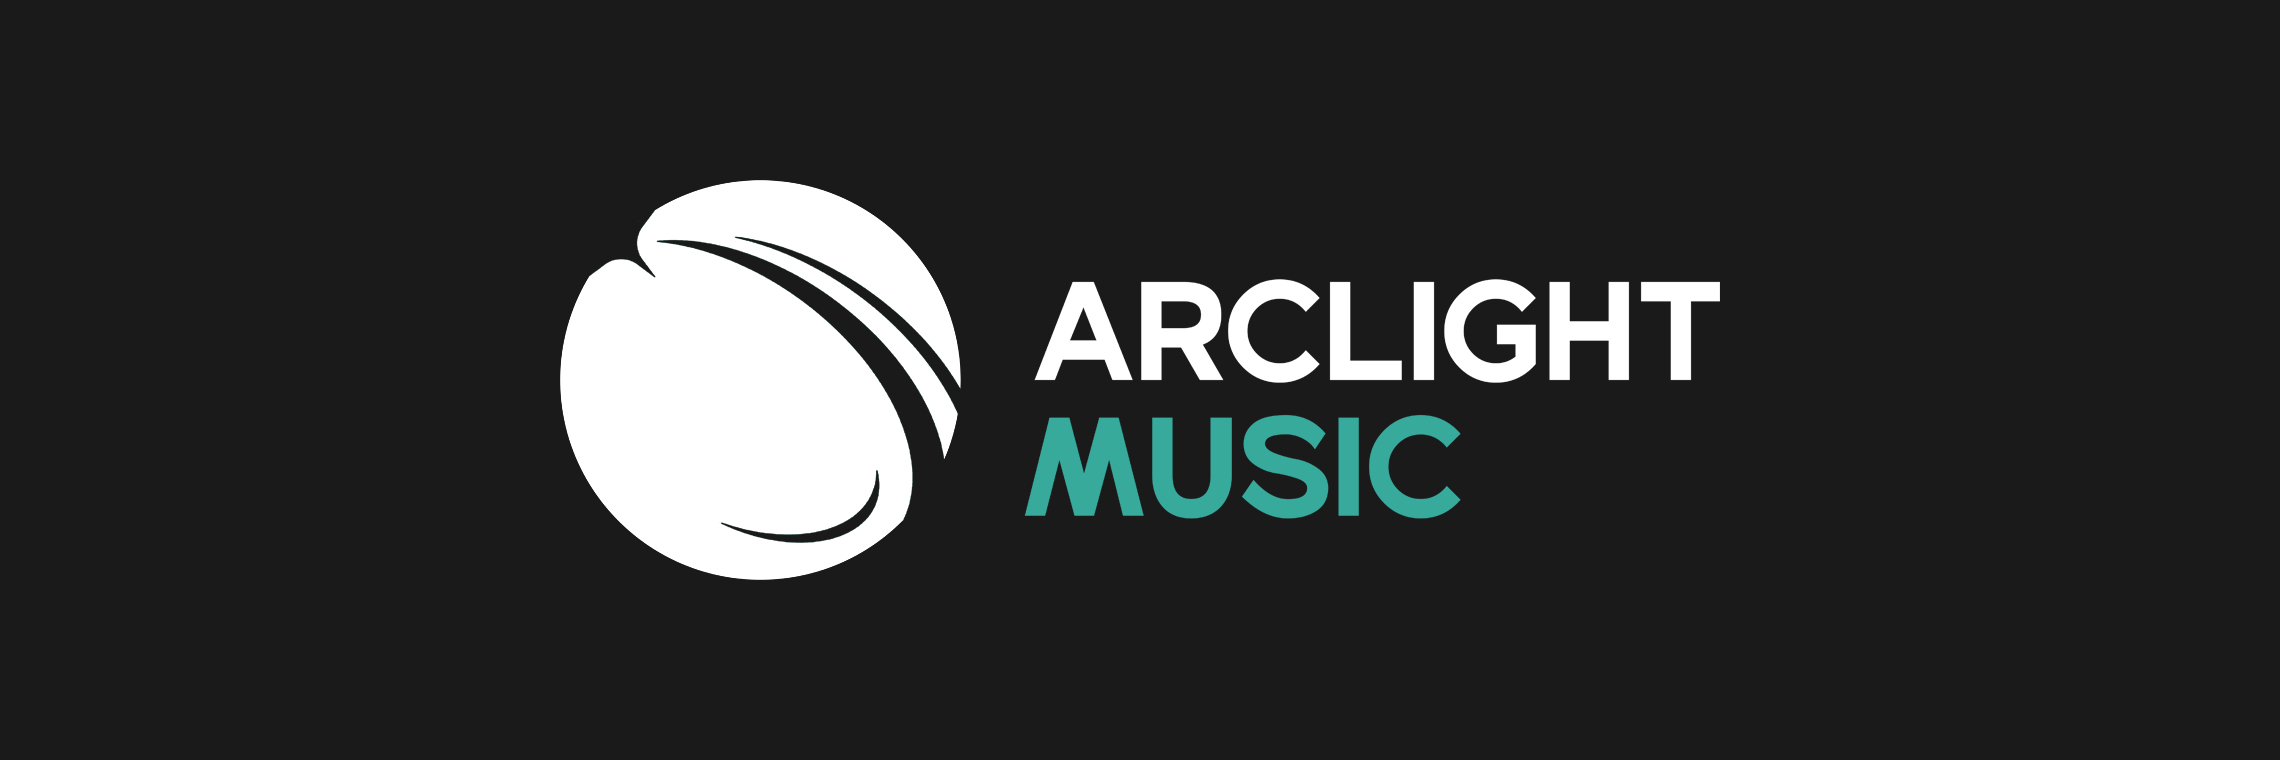 Arclight Music